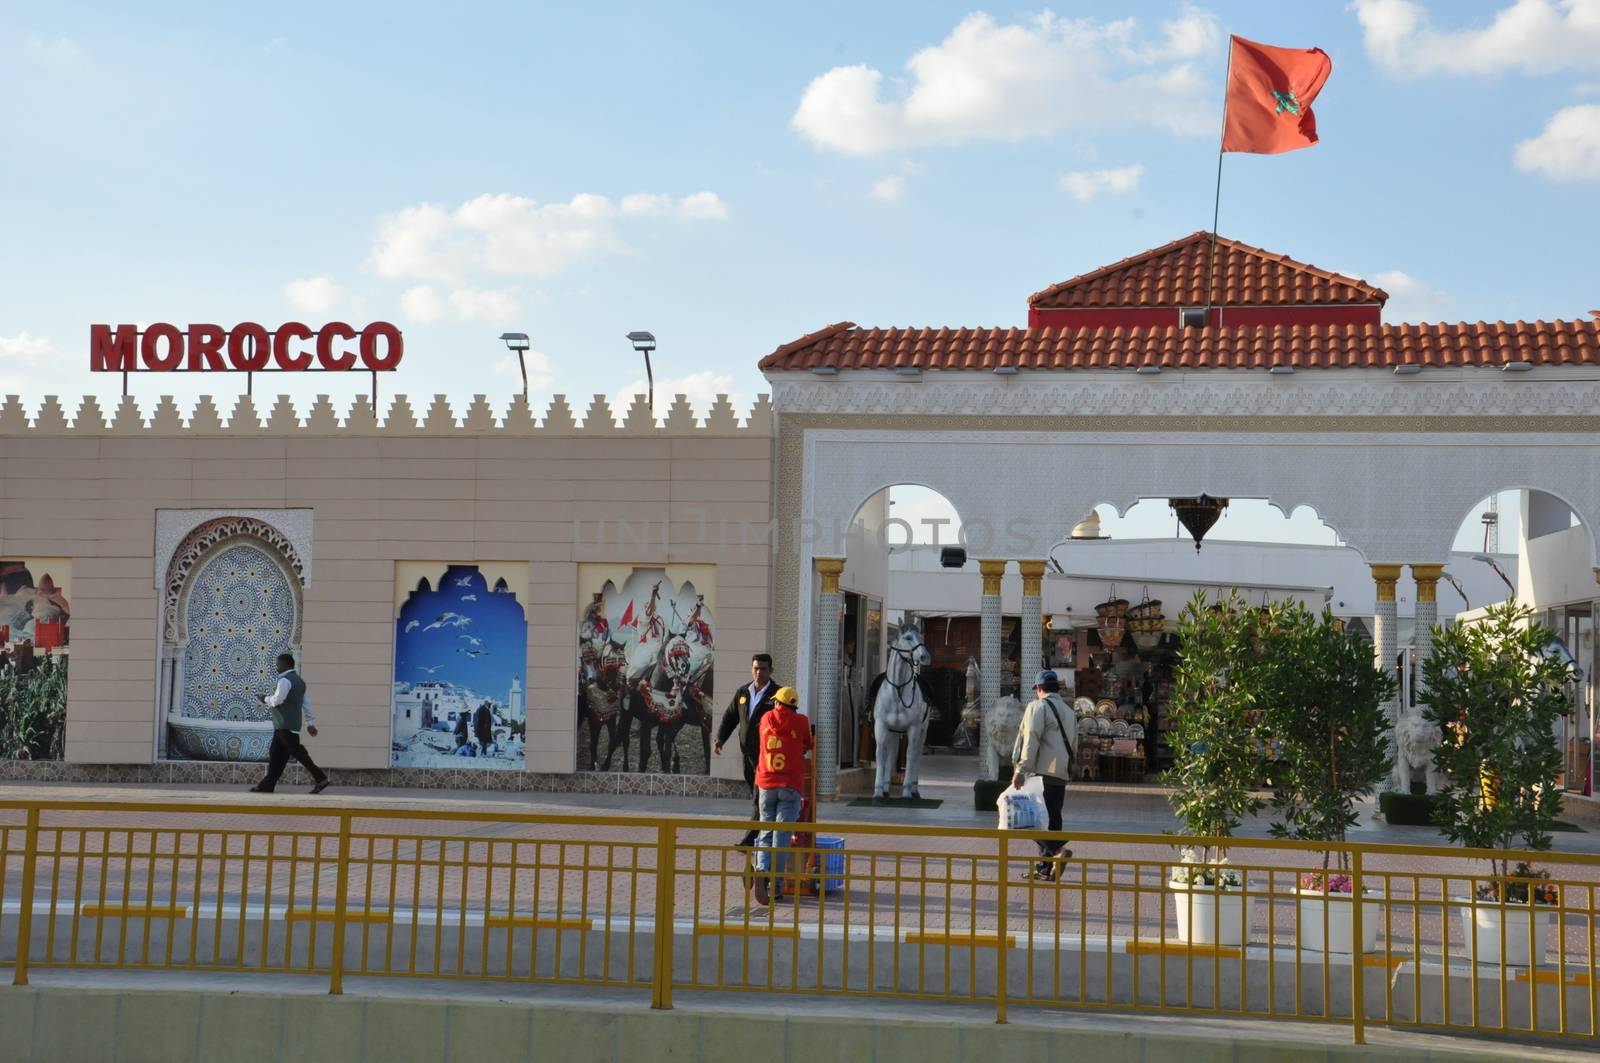 Morocco pavilion at Global Village in Dubai, UAE by sainaniritu